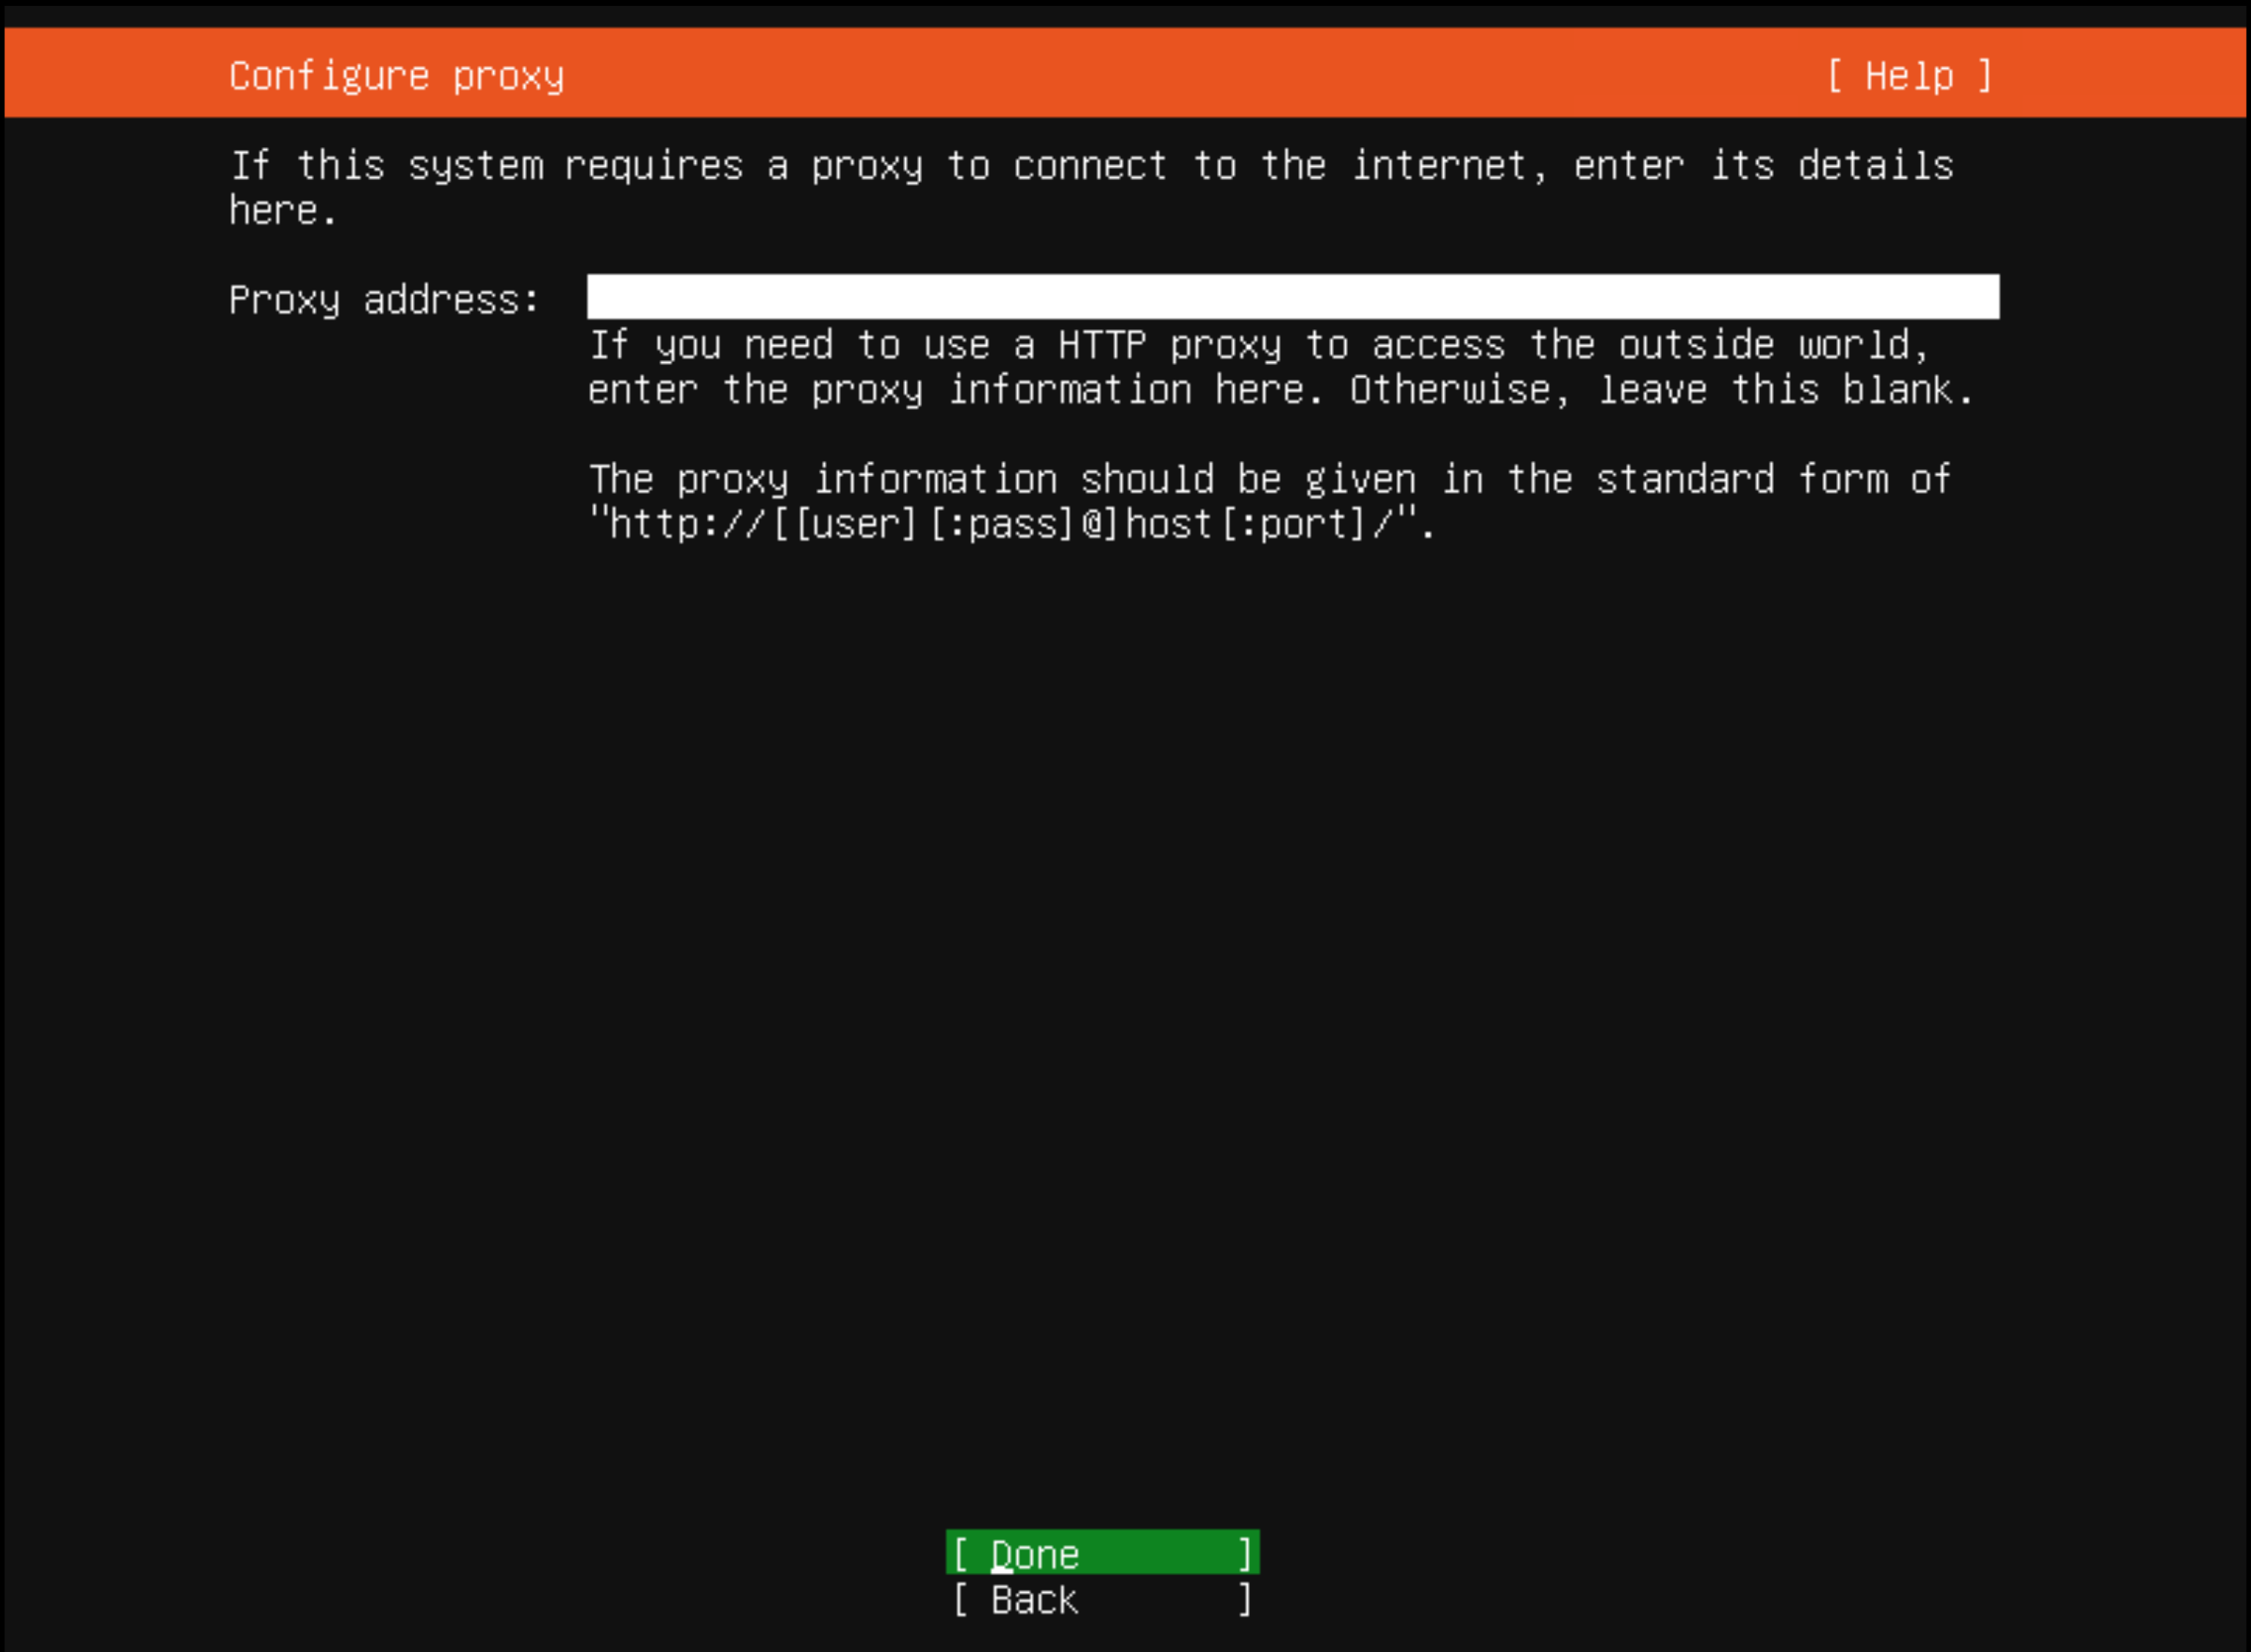 Ninth screenshot of an Ubuntu installation.